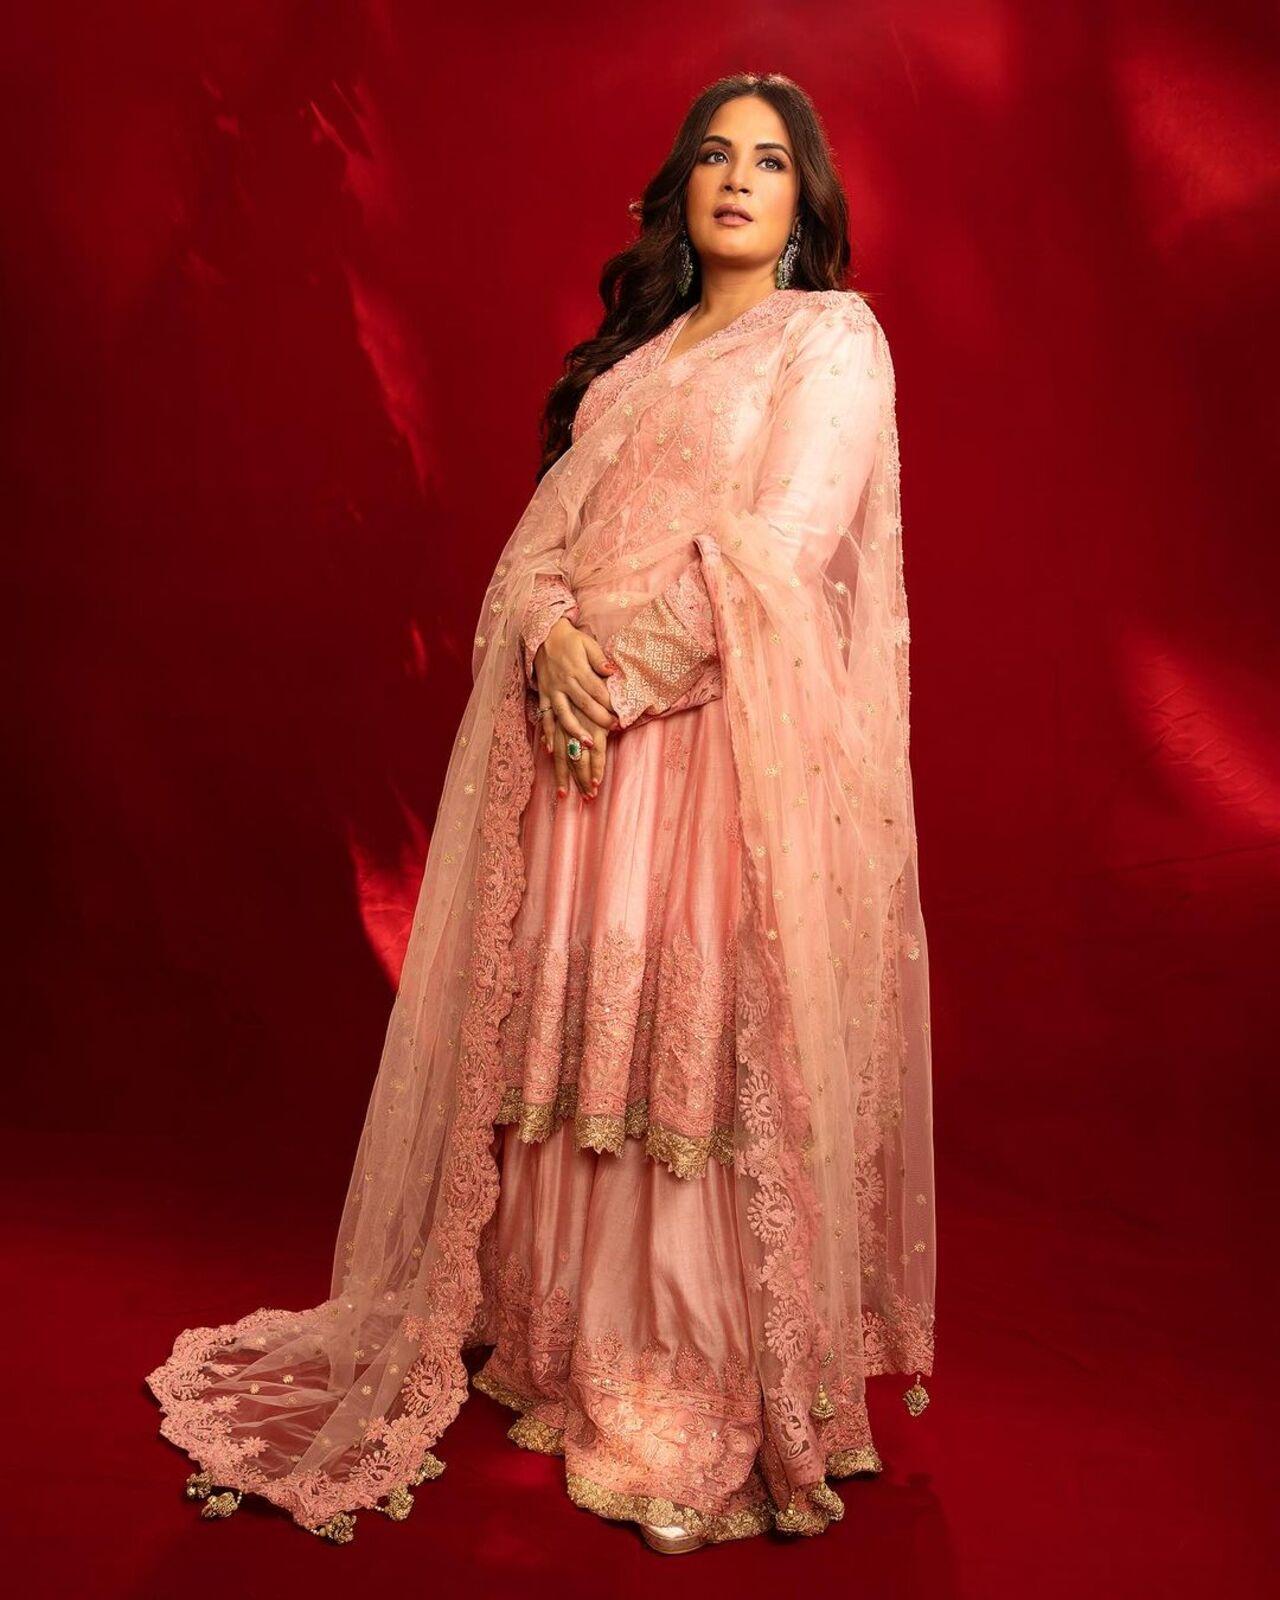 Richa Chadha, who previously worked with Bhansali in ‘Goliyon Ki Raasleela Ram-Leela’ is all set to embrace motherhood. 